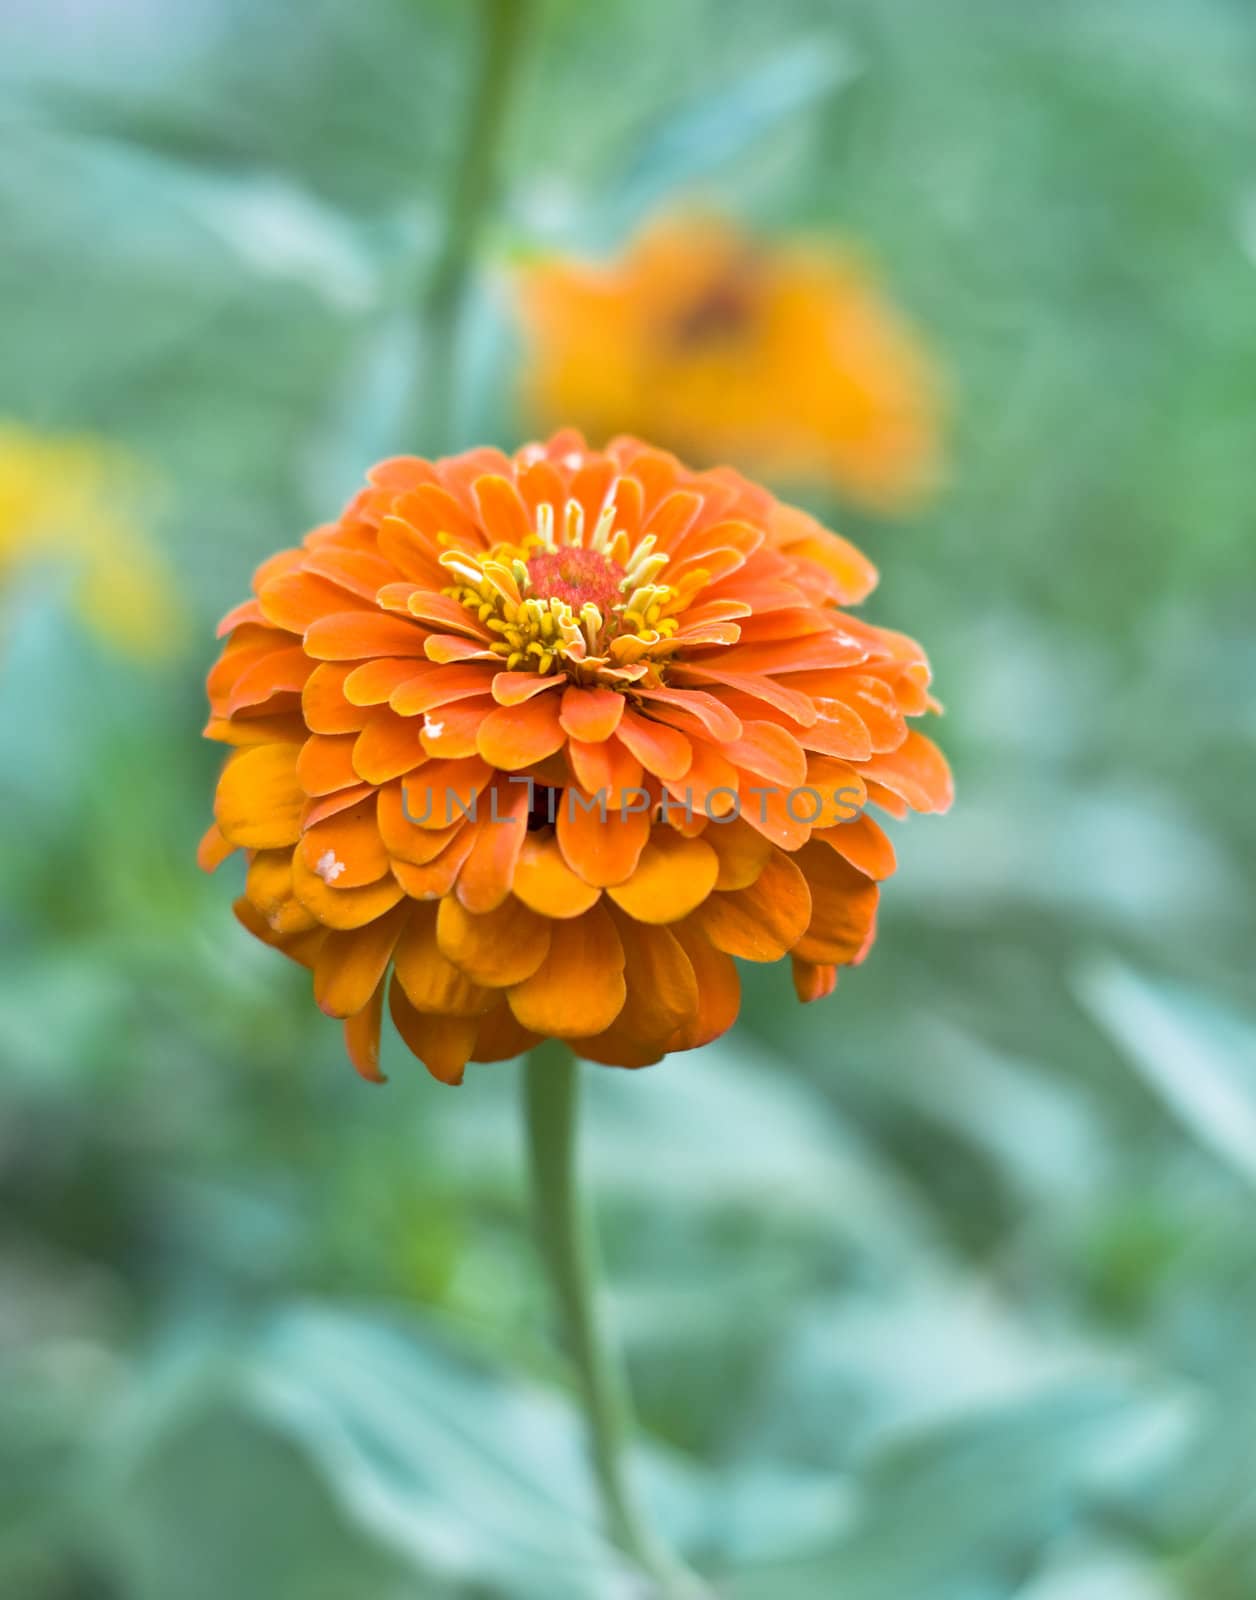 Orange flower close-up. Macro photography, blur, focus on the flower.